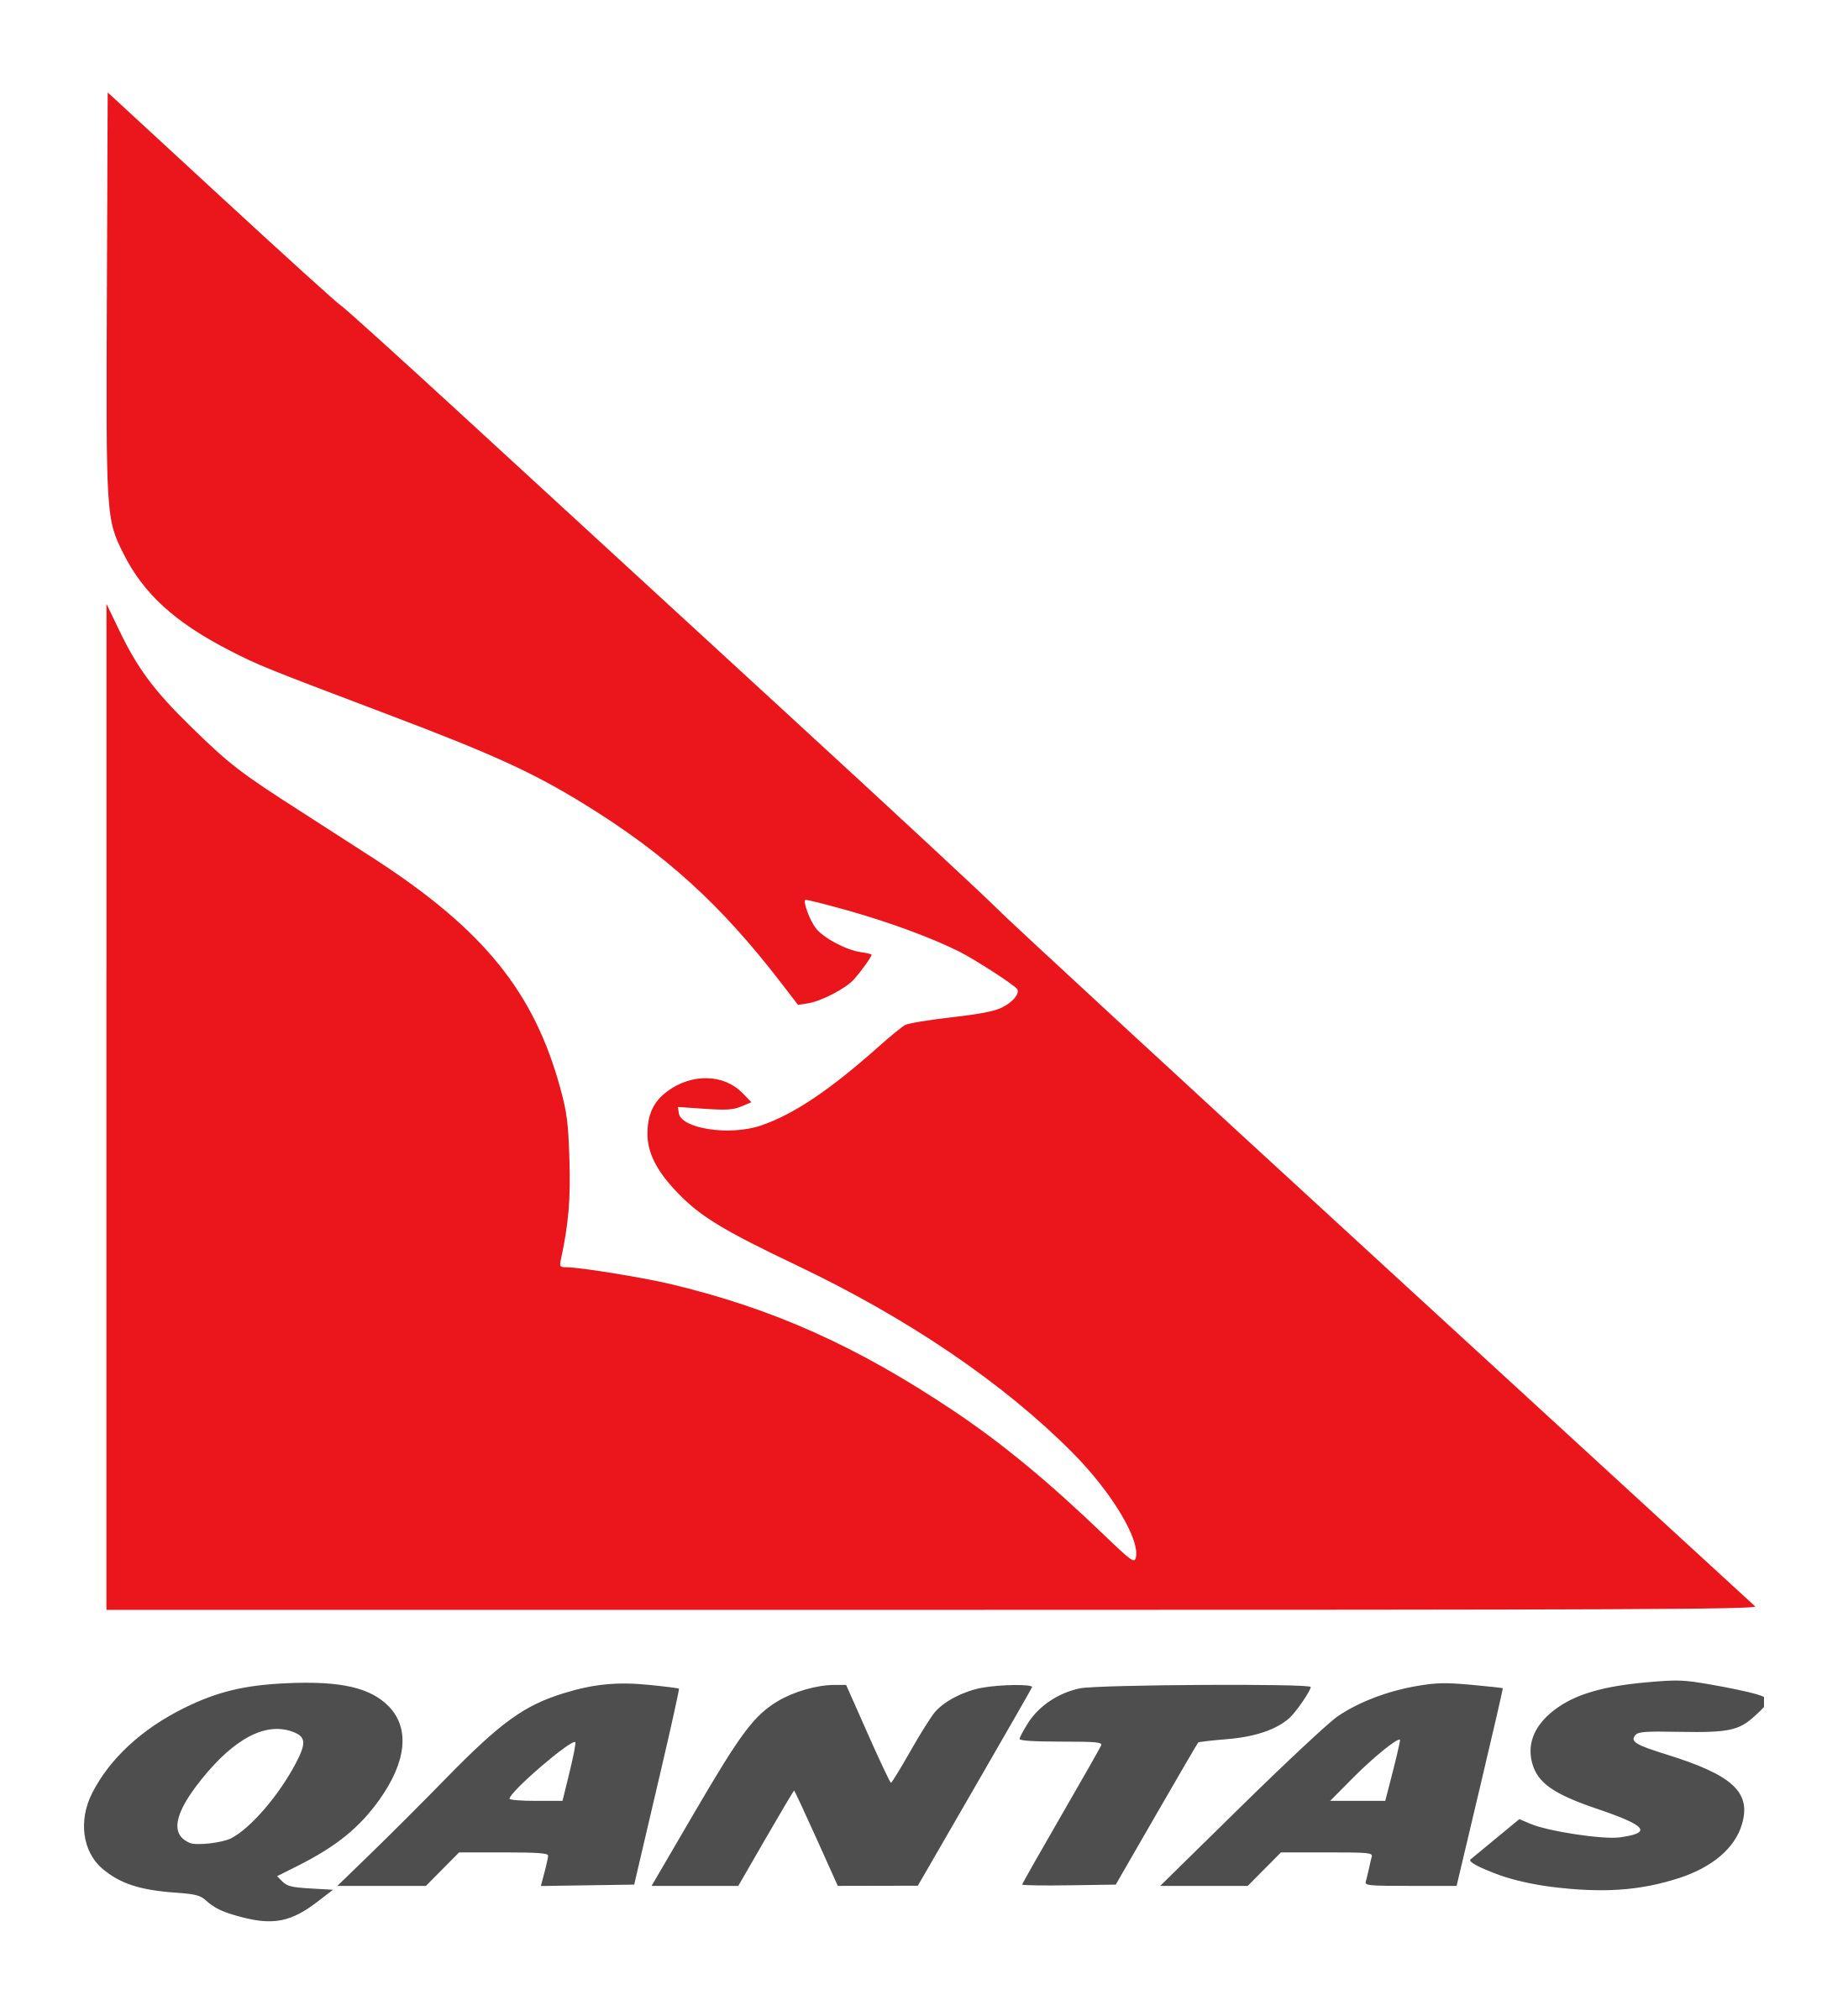 What Company Has a Kangaroo as Their Logo - Qantas Logo, Qantas Symbol, Meaning, History and Evolution